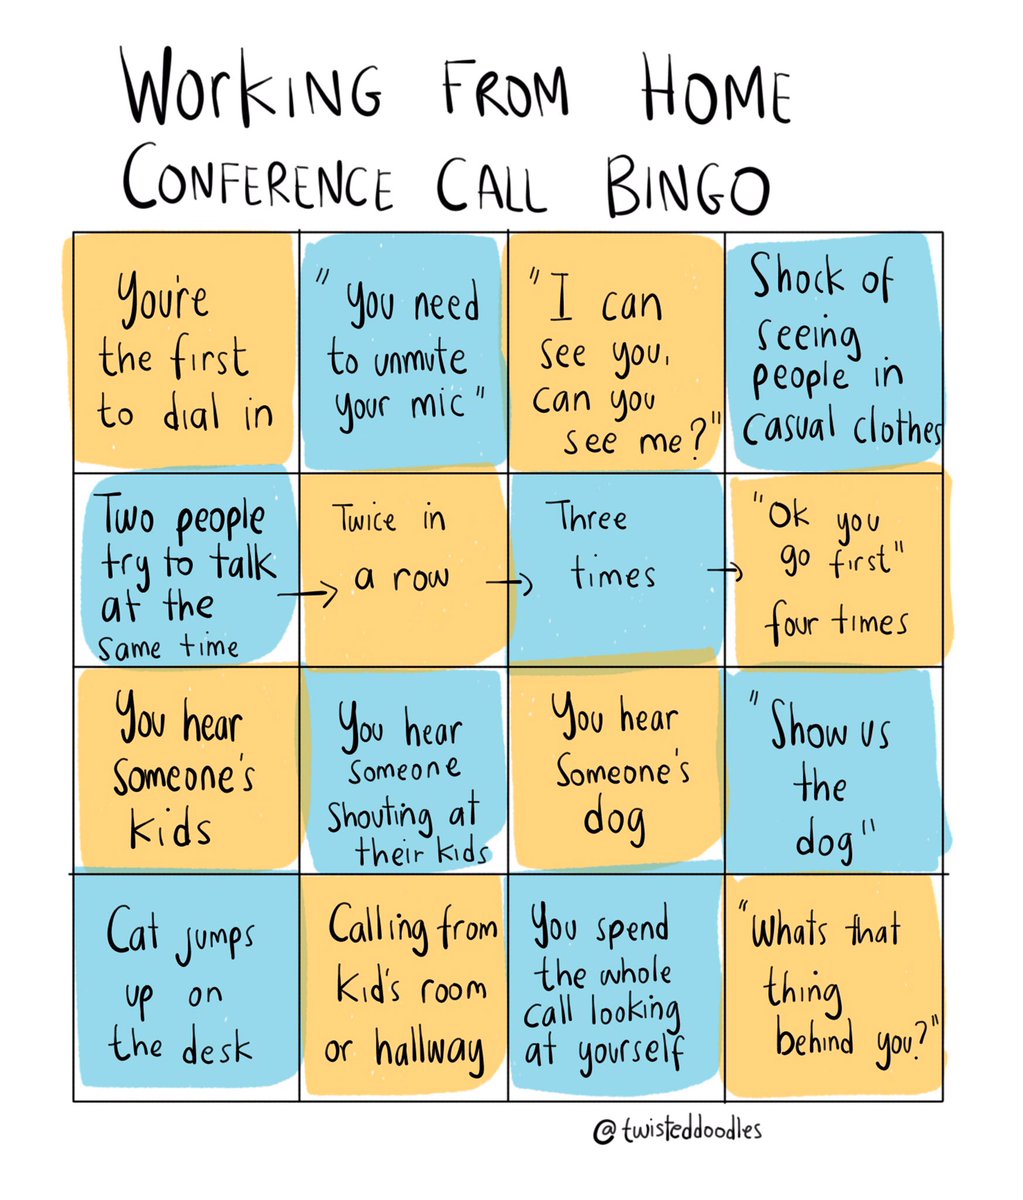 Conference call bingo